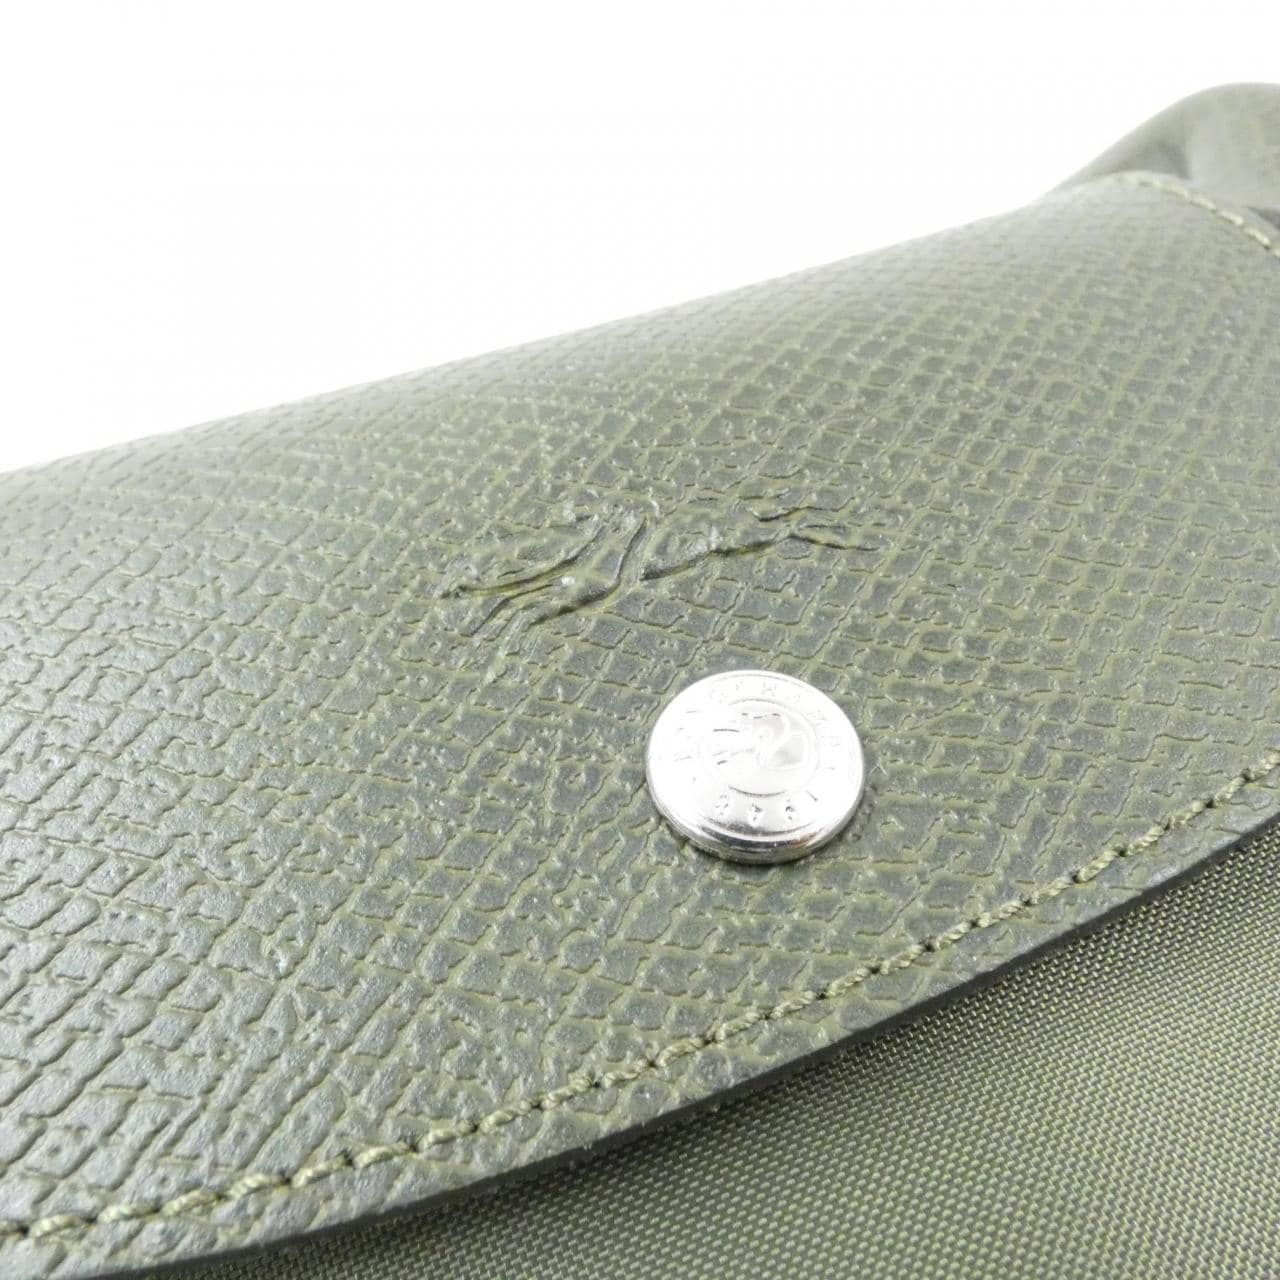 [新品] Longchamp Le Pliage 綠色 1899 919 肩背包